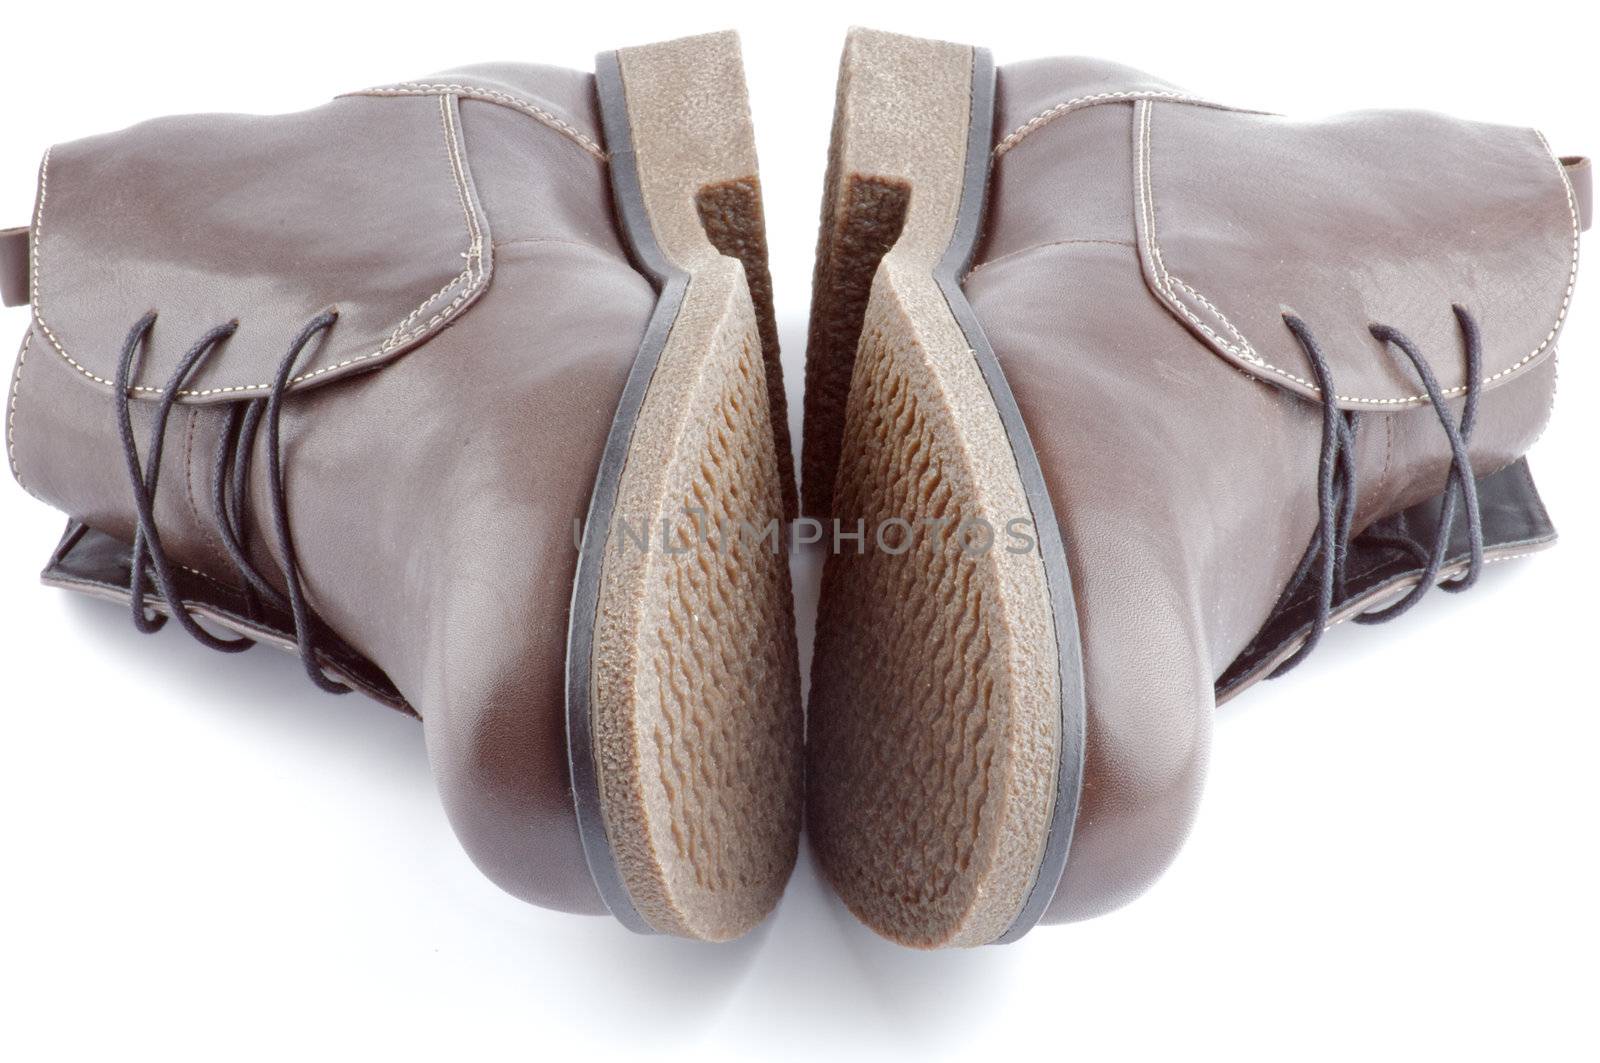 Brown man's shoes  by zhekos